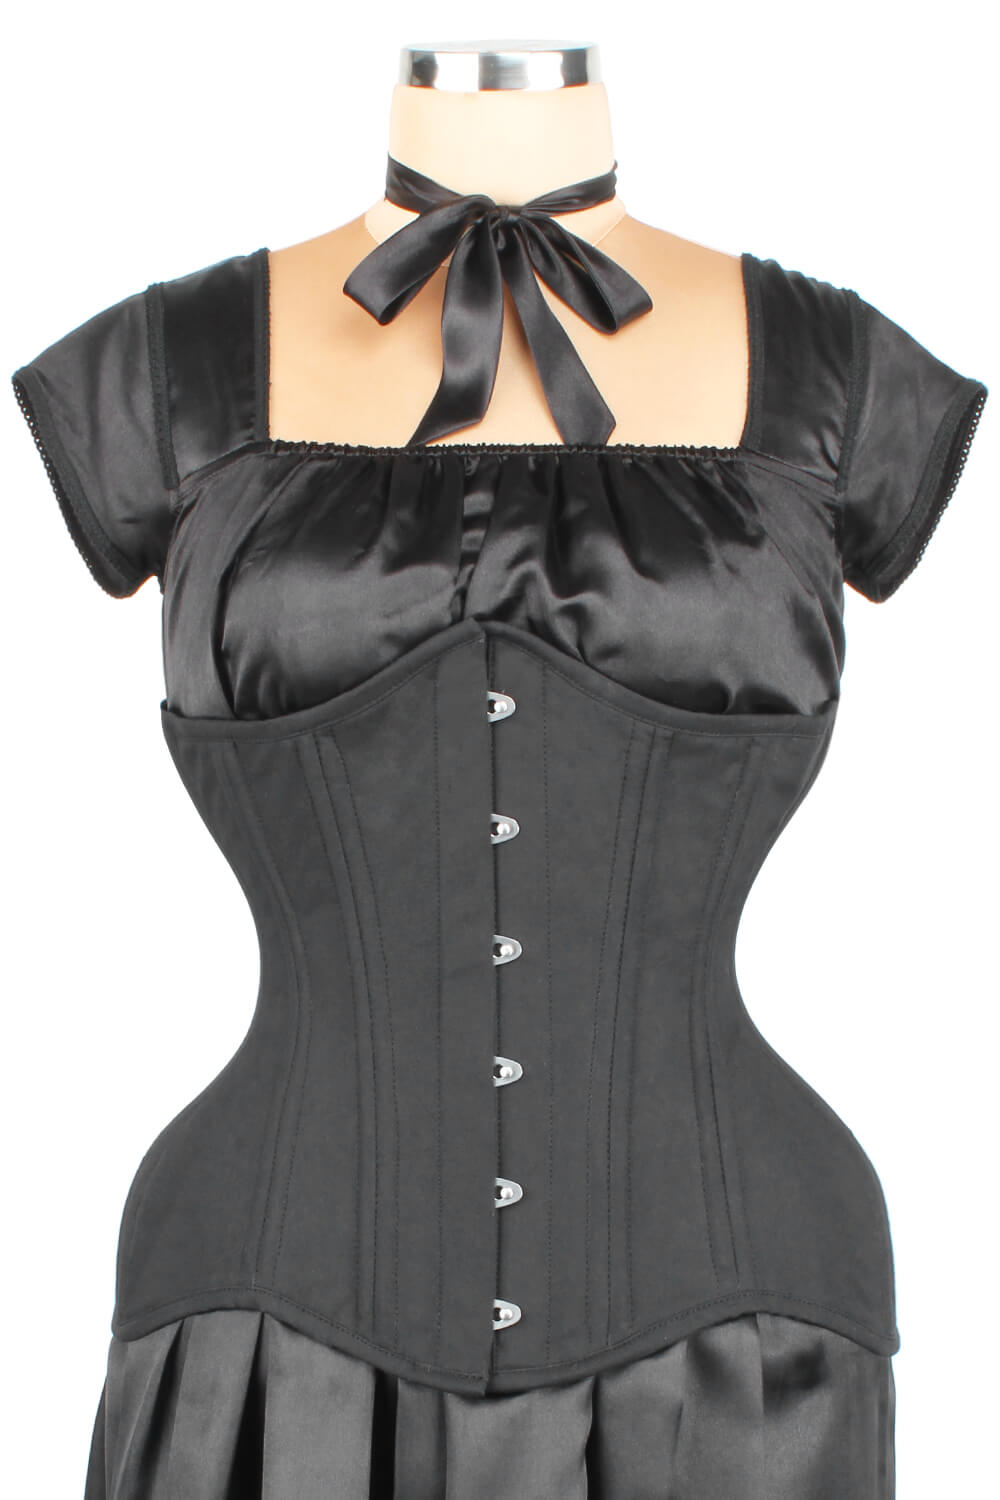 Do women wear corsets today? - Quora